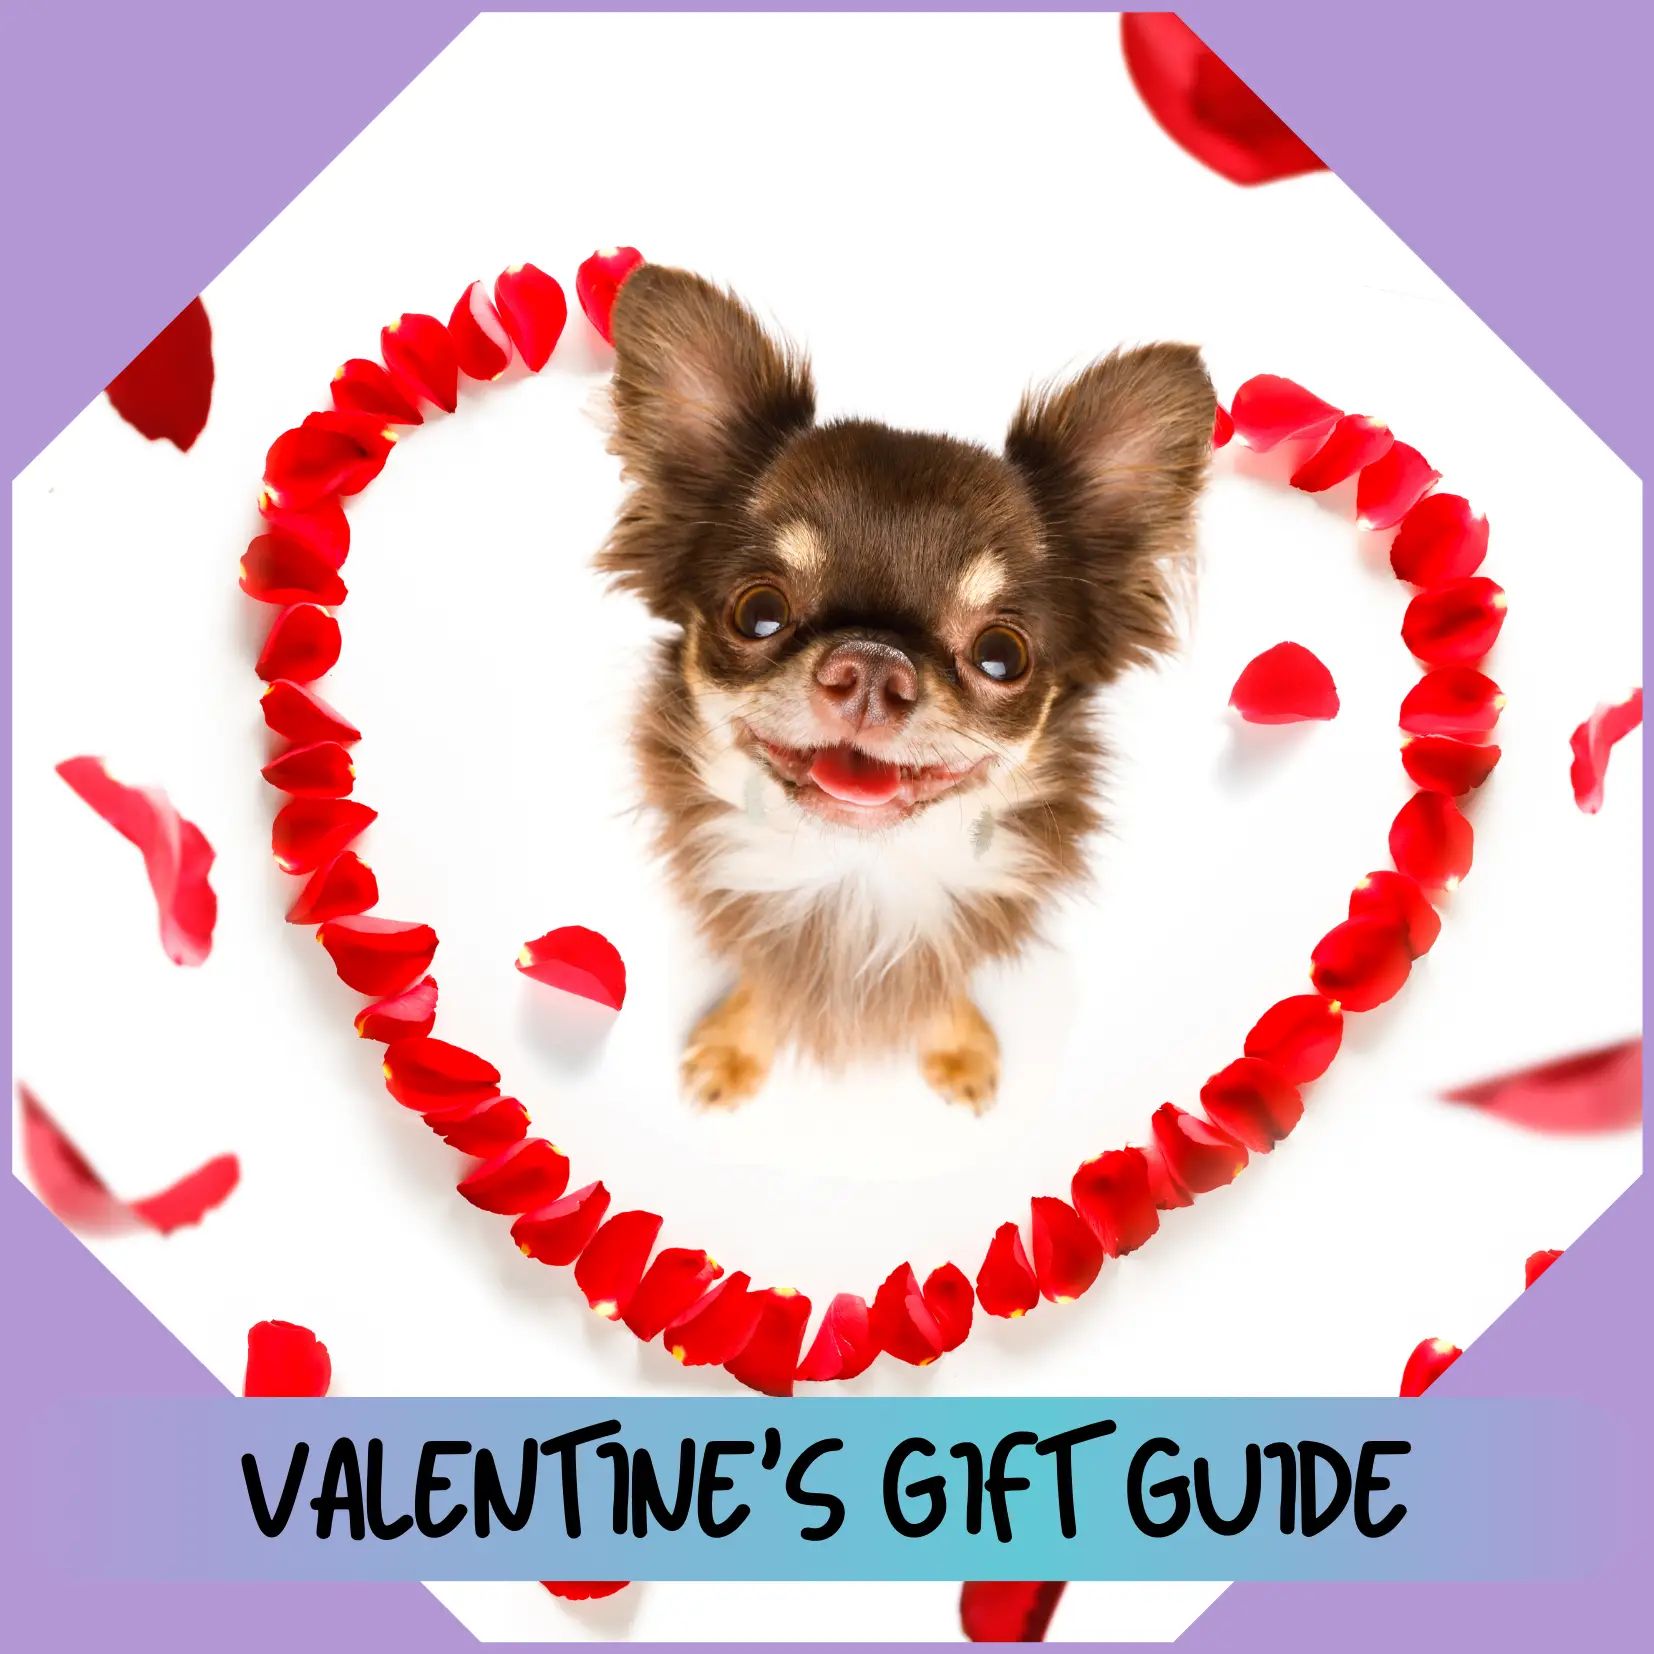 cuddla-dog-gift-ideas-for-valentine